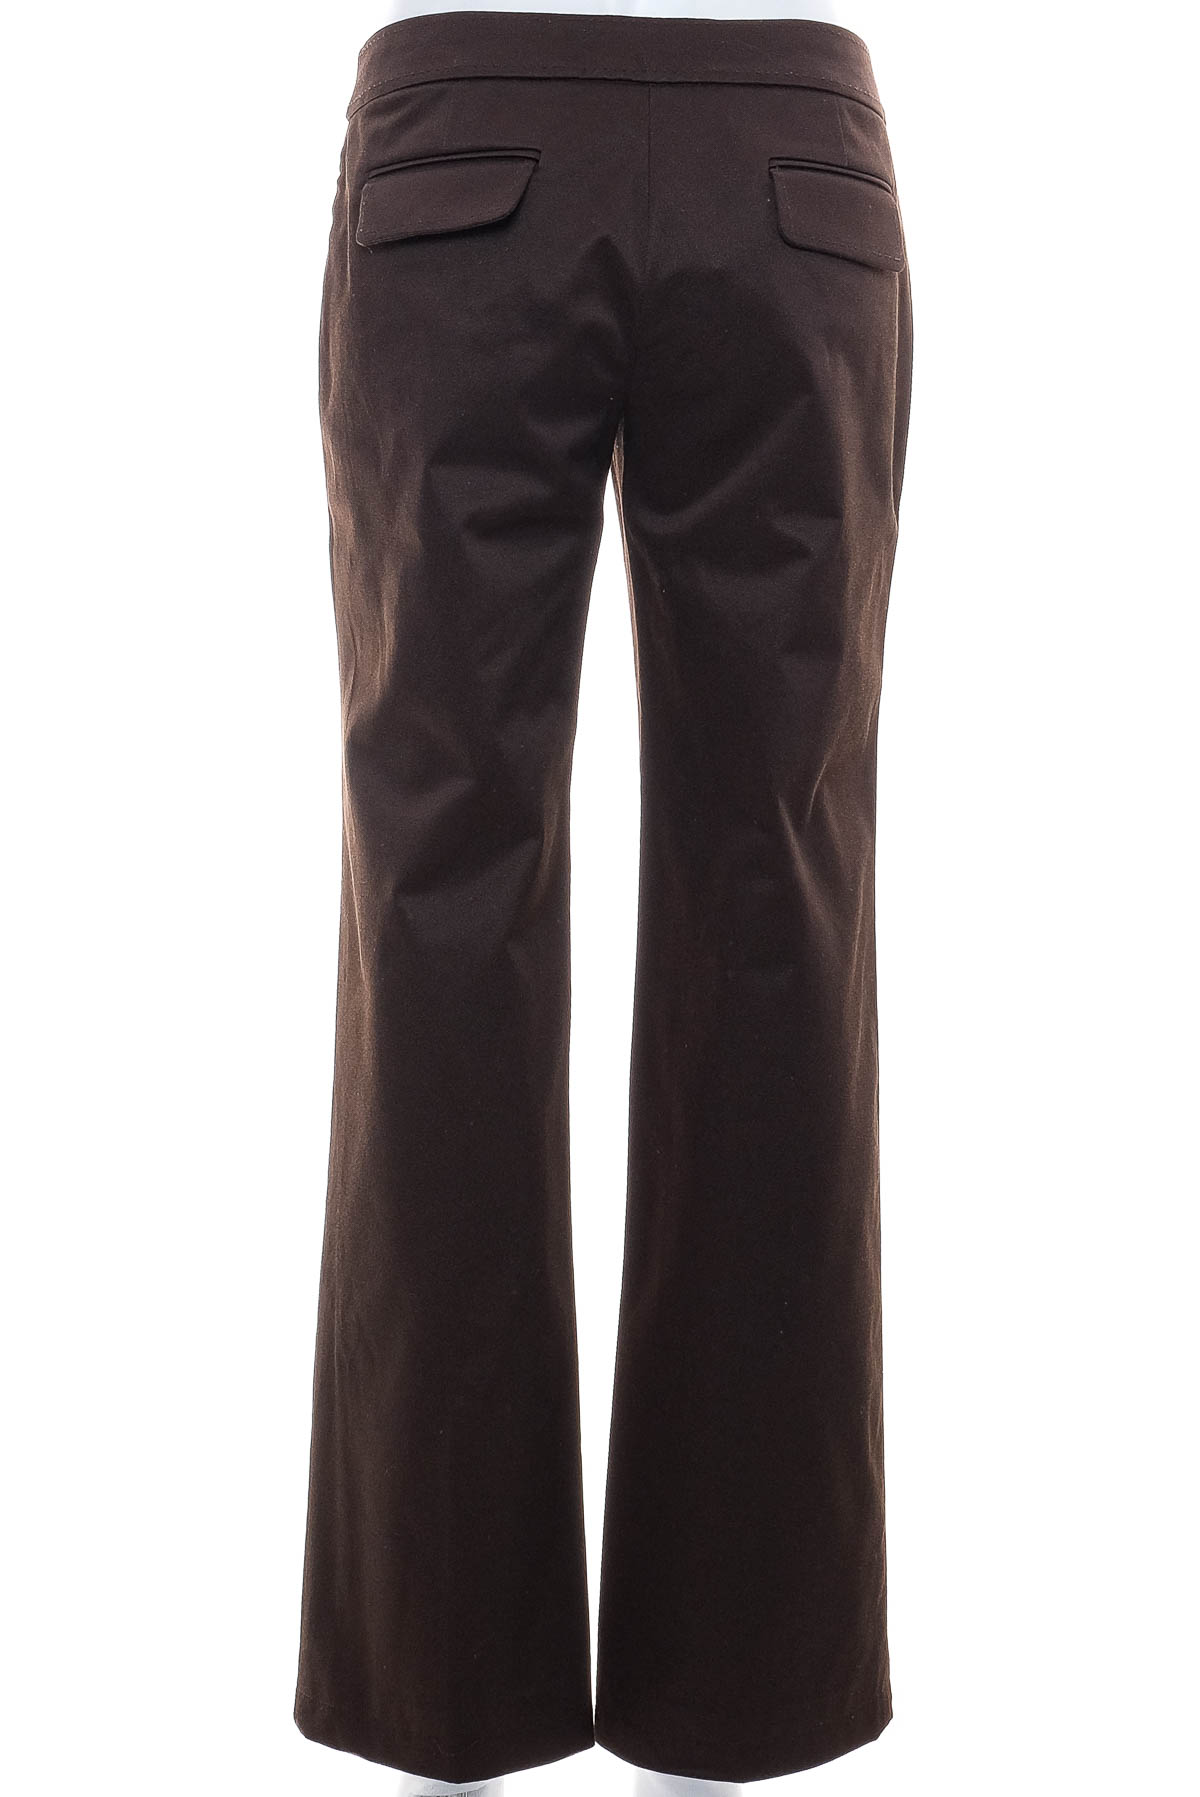 Women's trousers - ESPRIT - 1